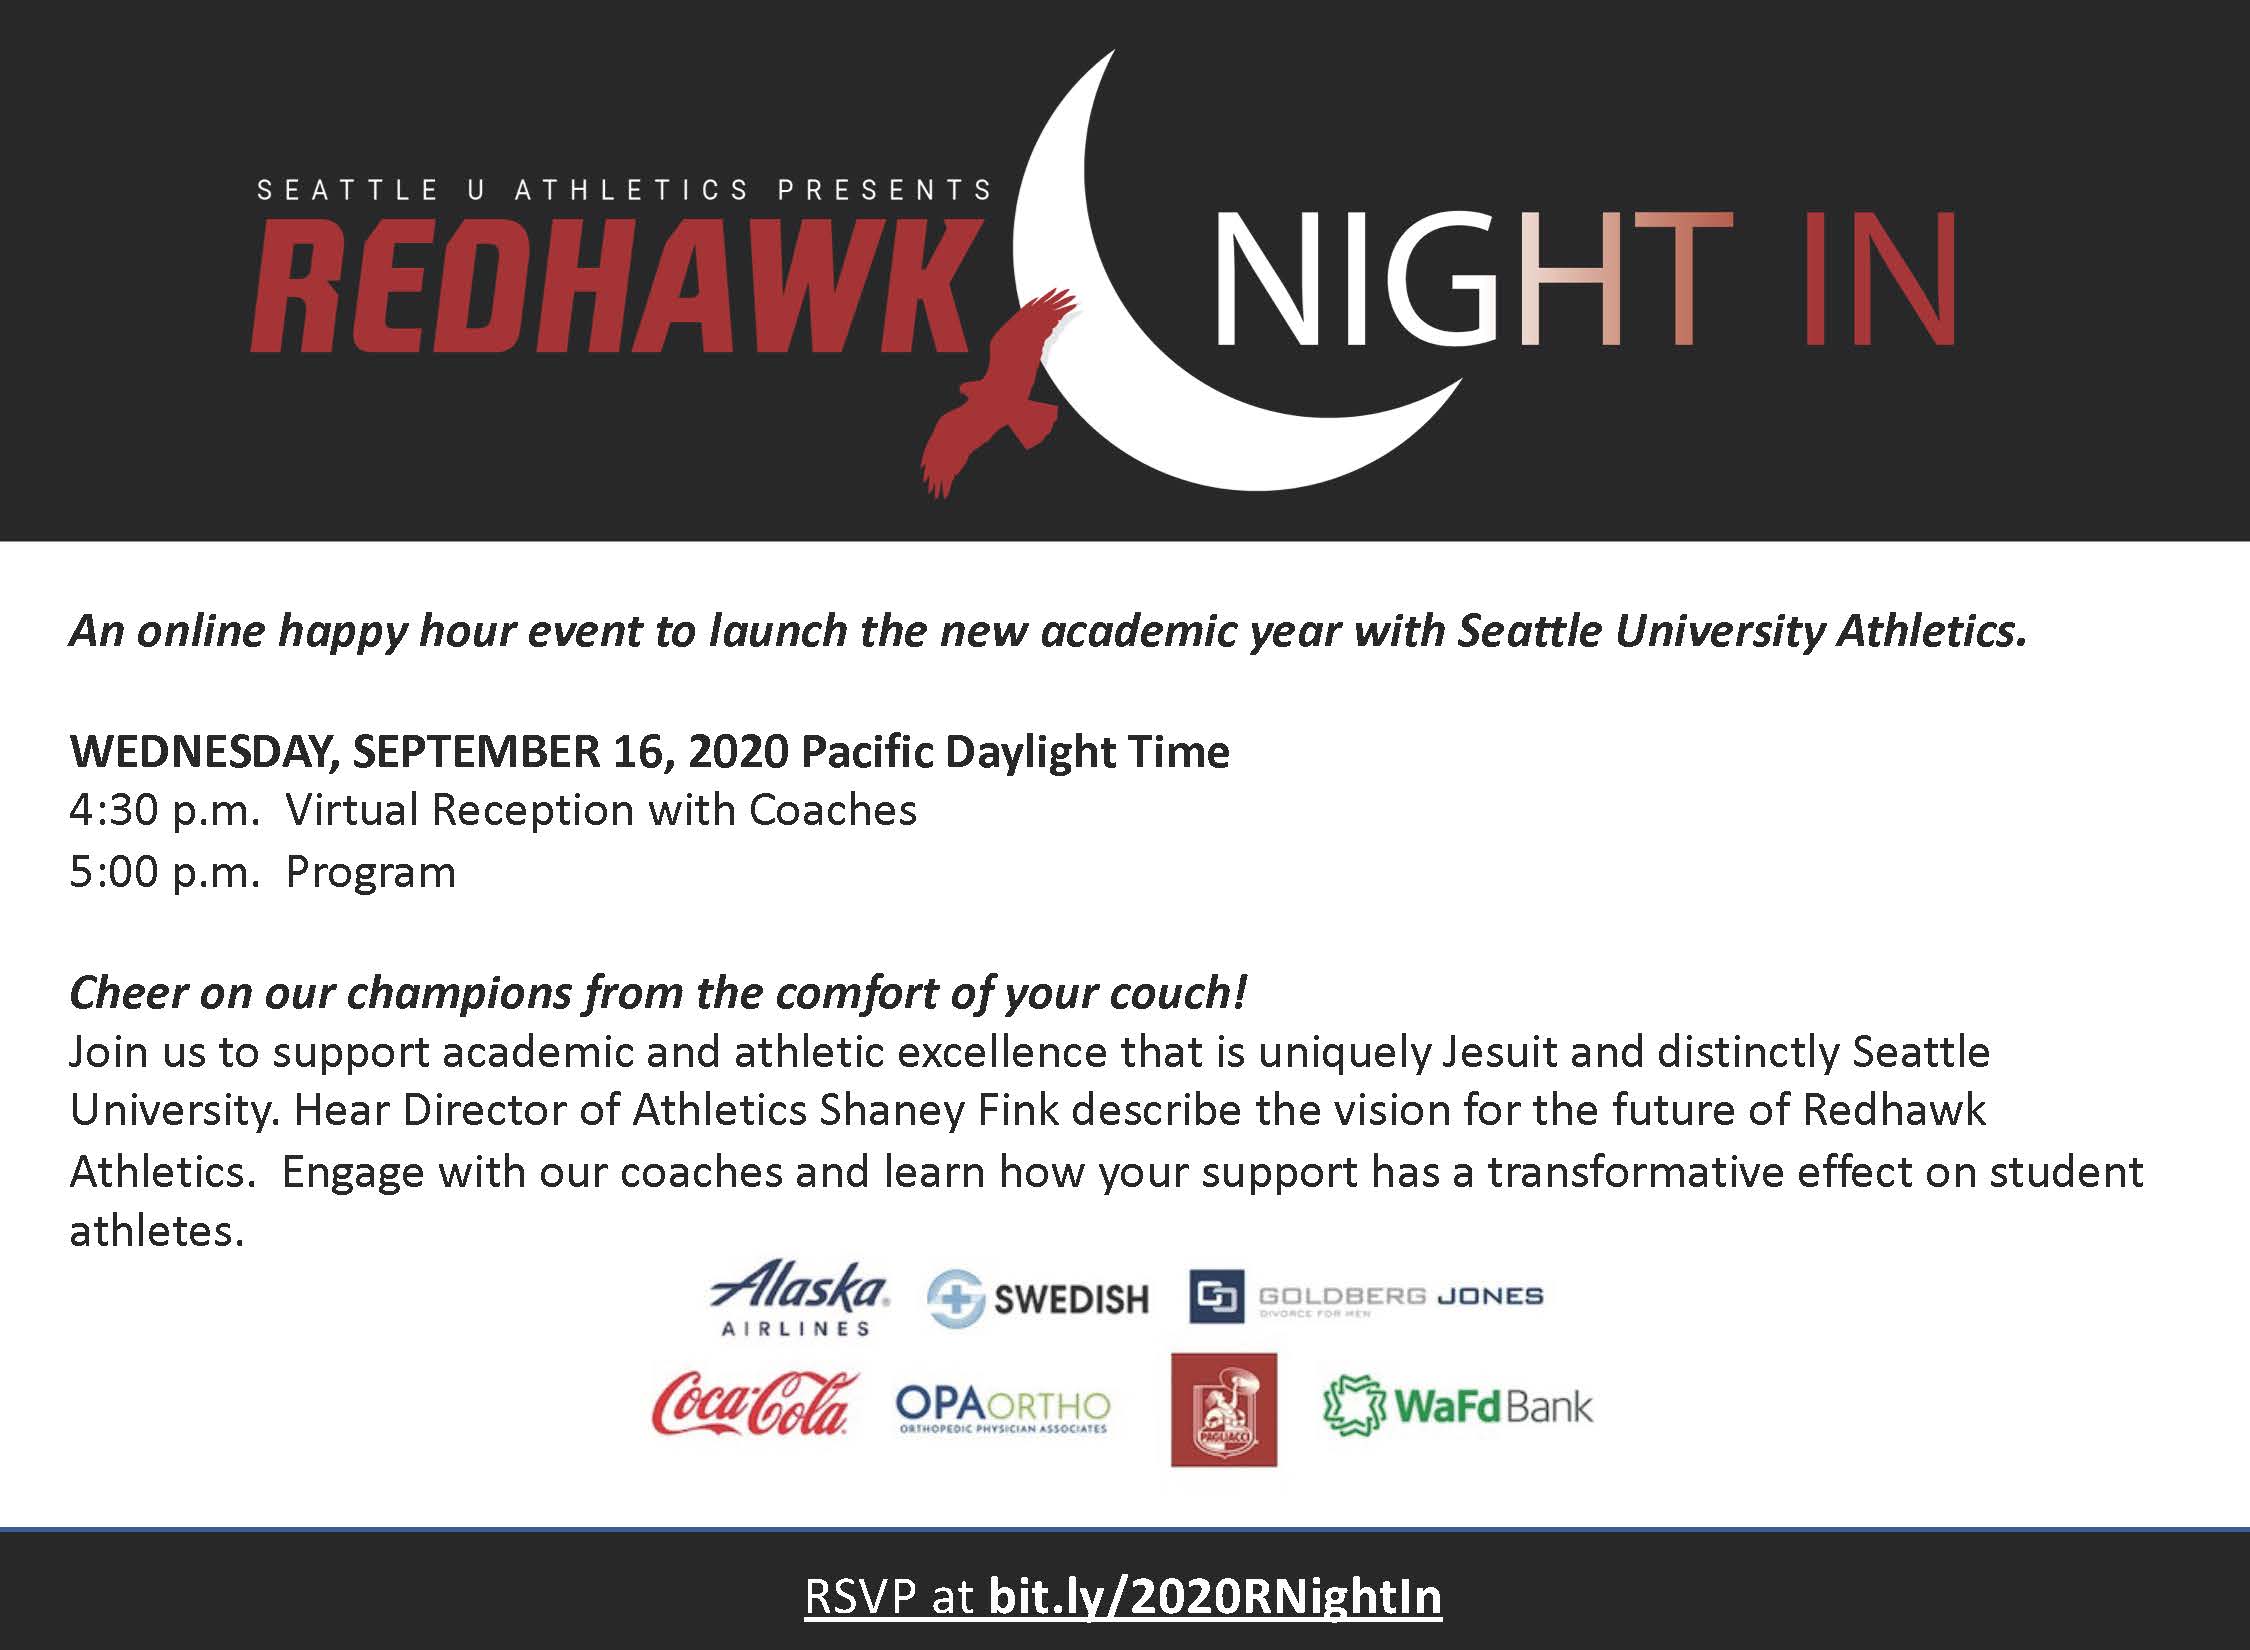 Redhawk Night In on September 16